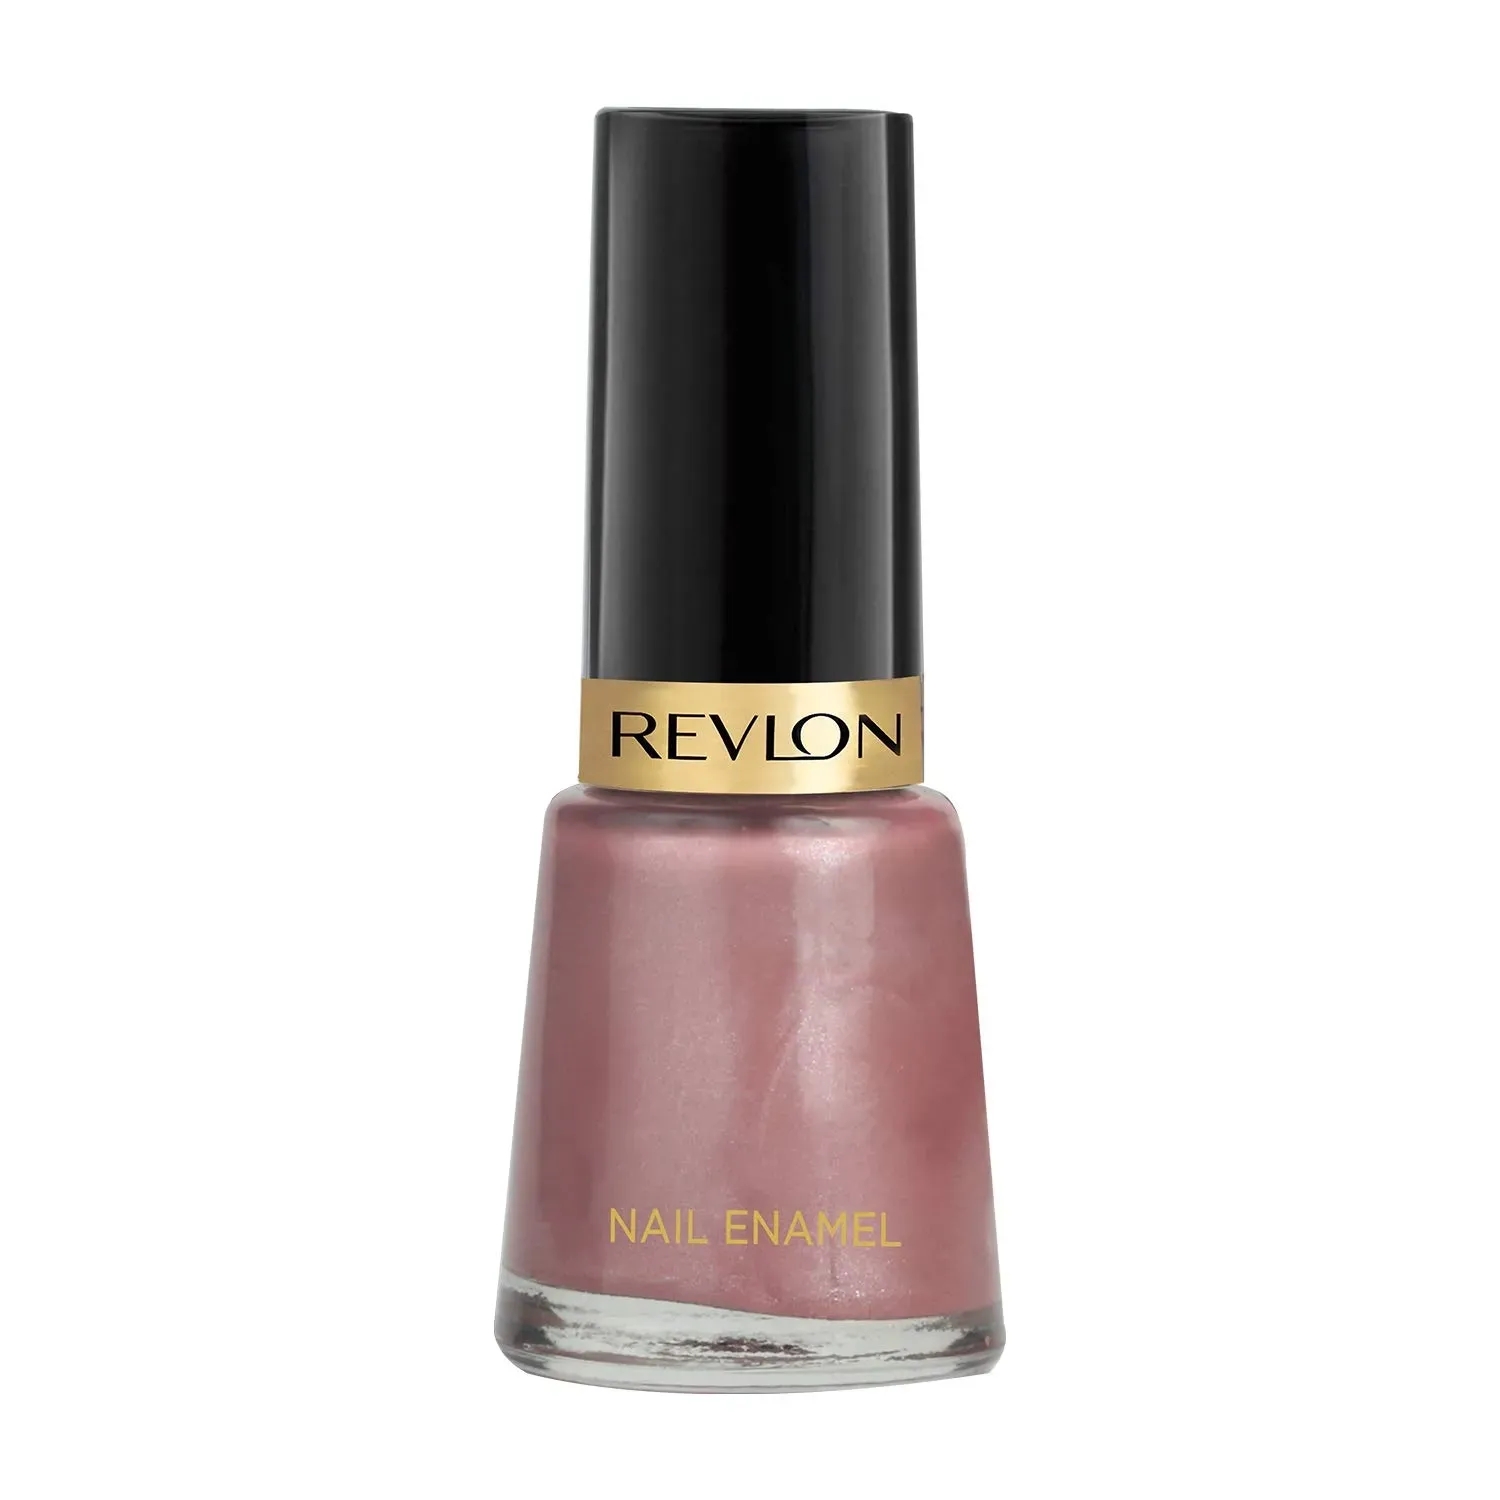 In a snap! Revlon Ultra HD! Snap nail polishes | Nail polish, Revlon nail  polish, Nail polish colors